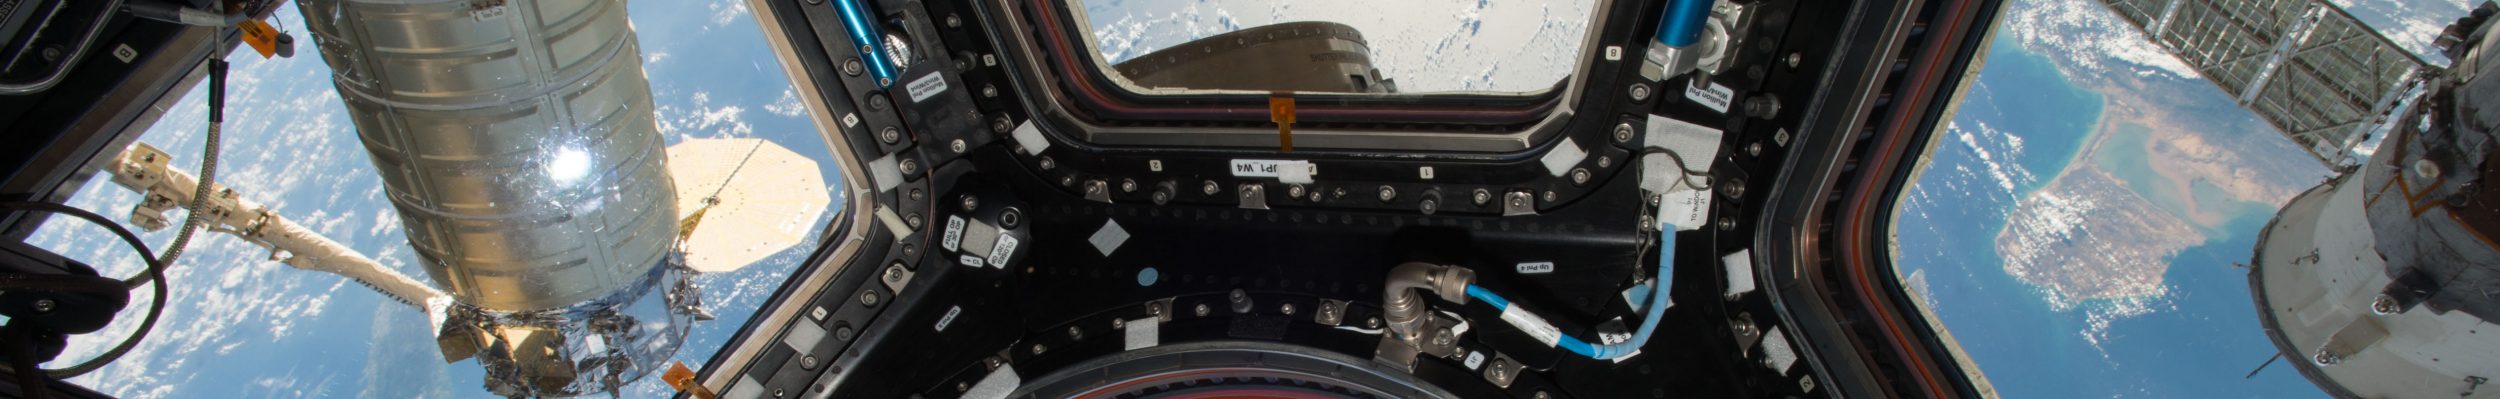 International Space Station Cleanroom Packaging (Image)